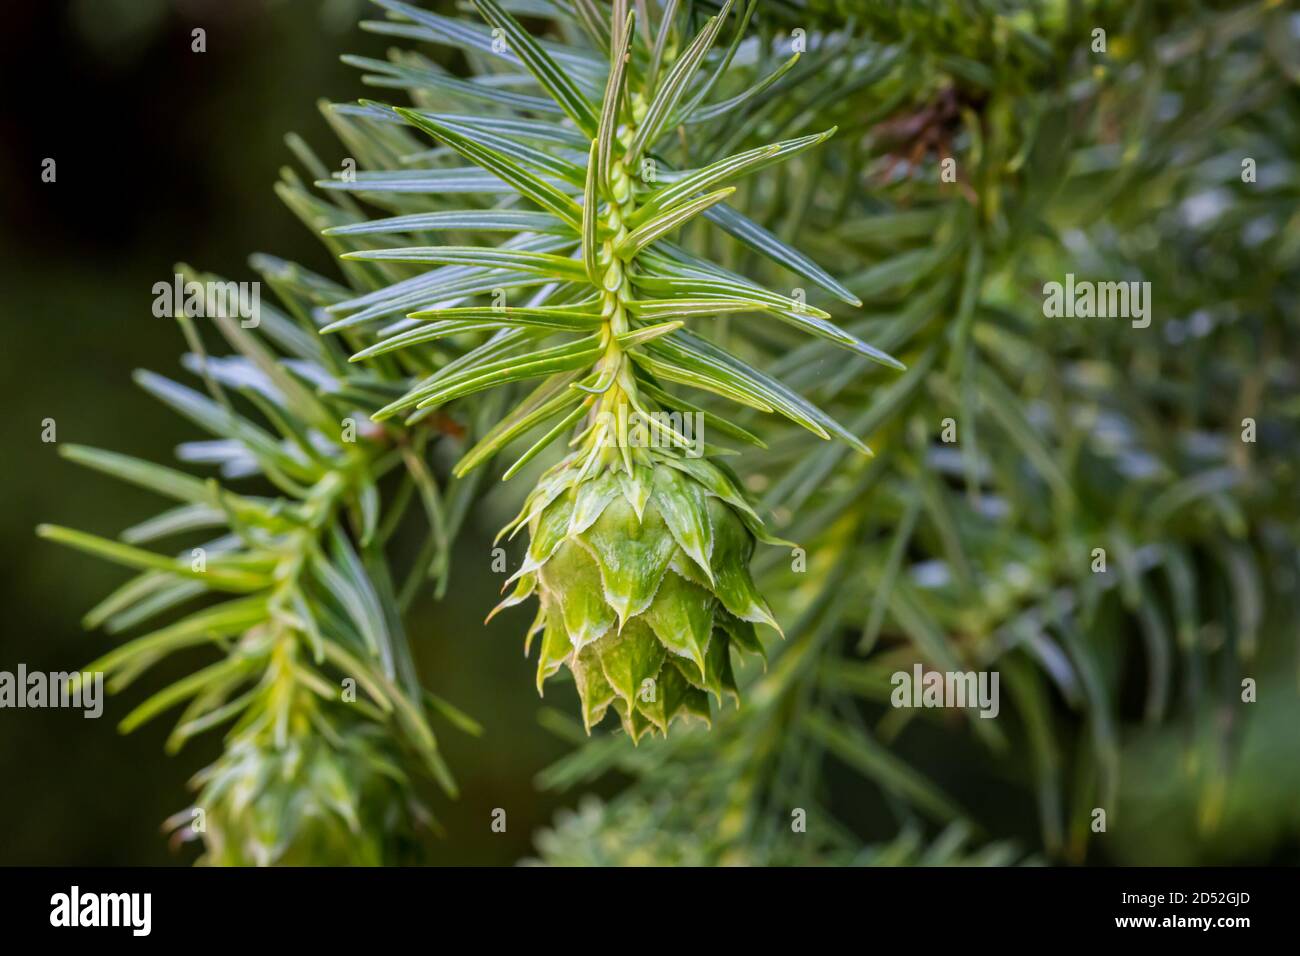 China fir tree (Cunninghamia lanceolata) pine cone in a Woodland Garden, Hungary Stock Photo